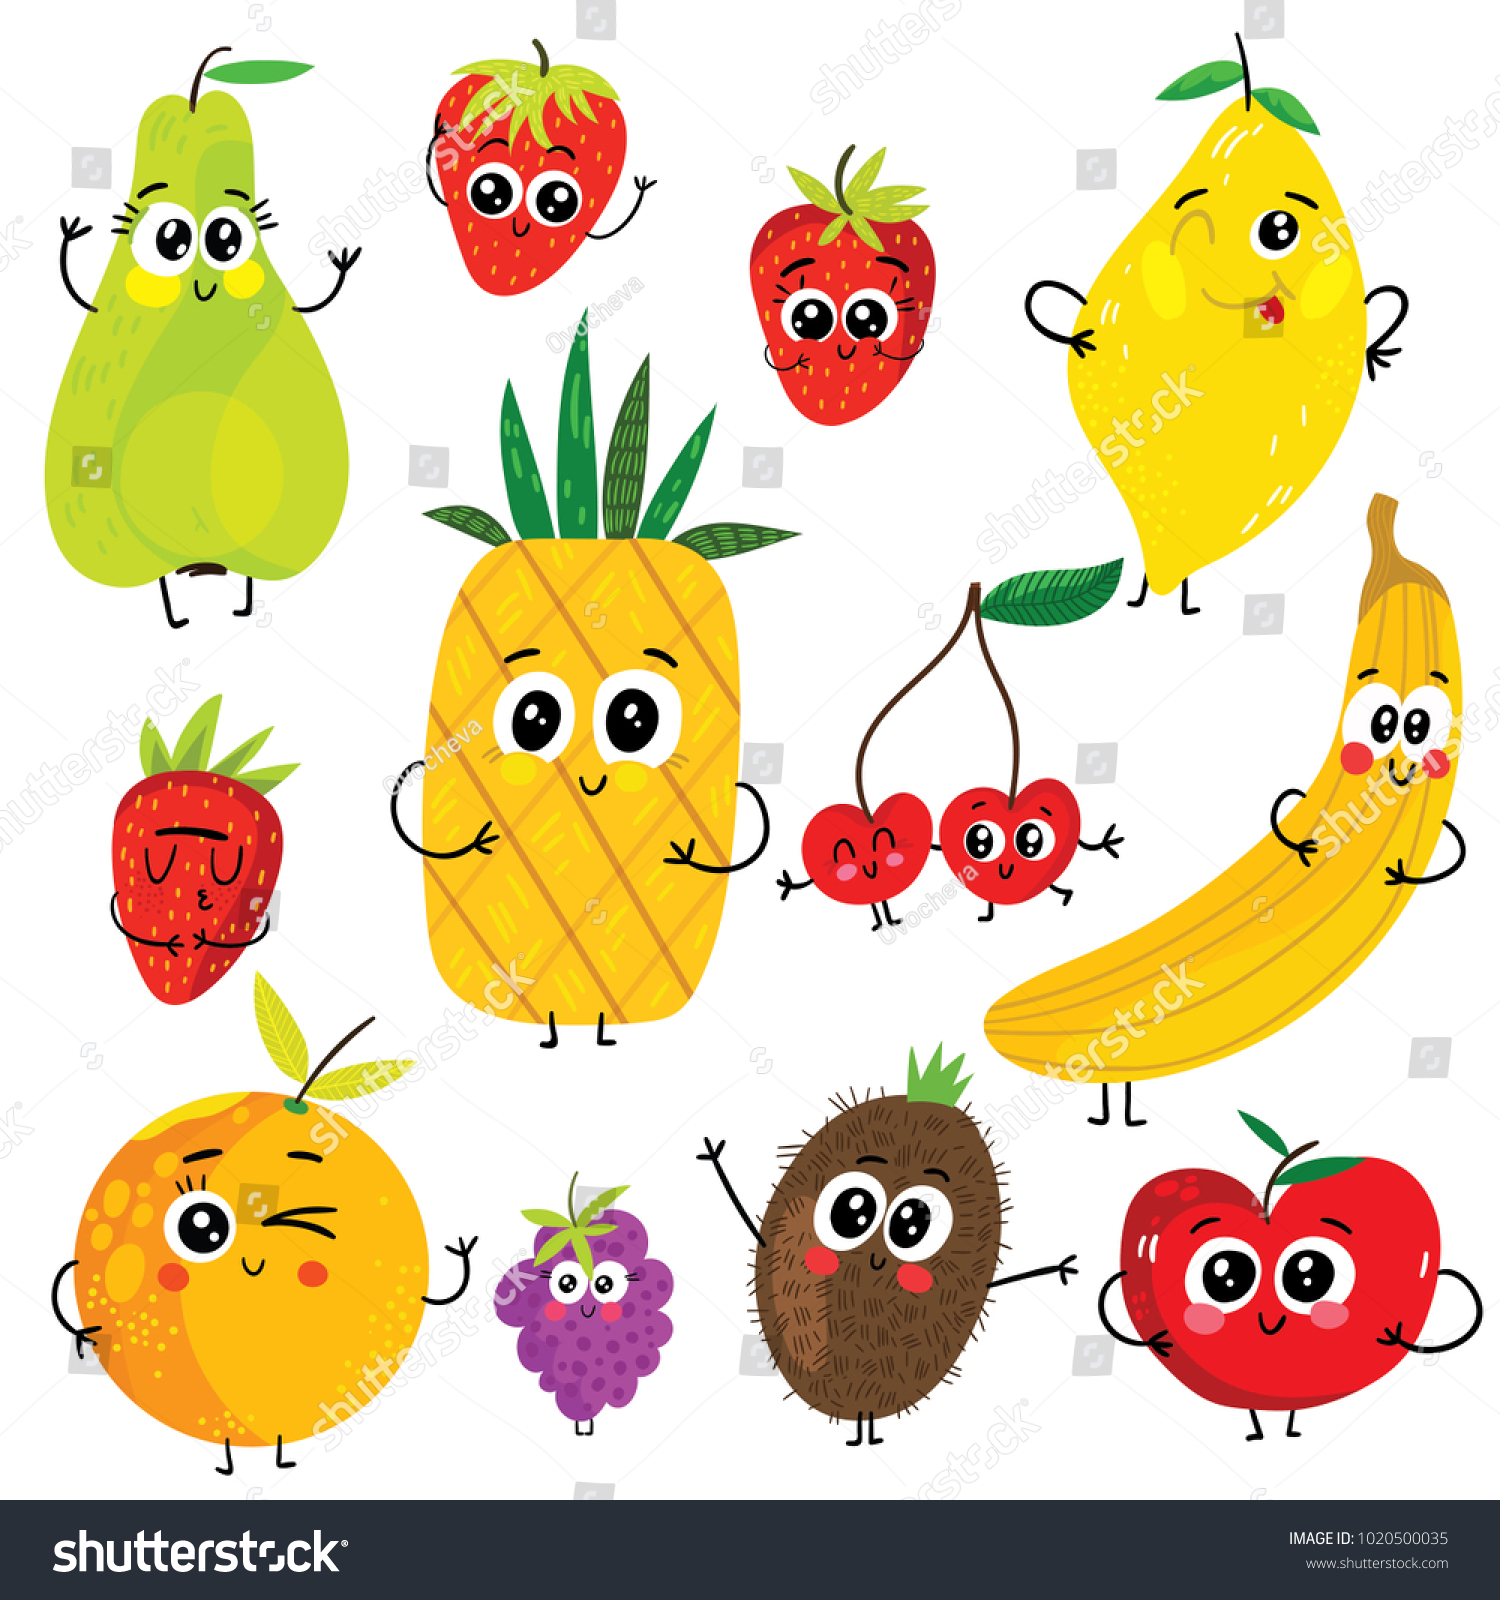 286,325 Cute fruit cartoon Images, Stock Photos & Vectors | Shutterstock